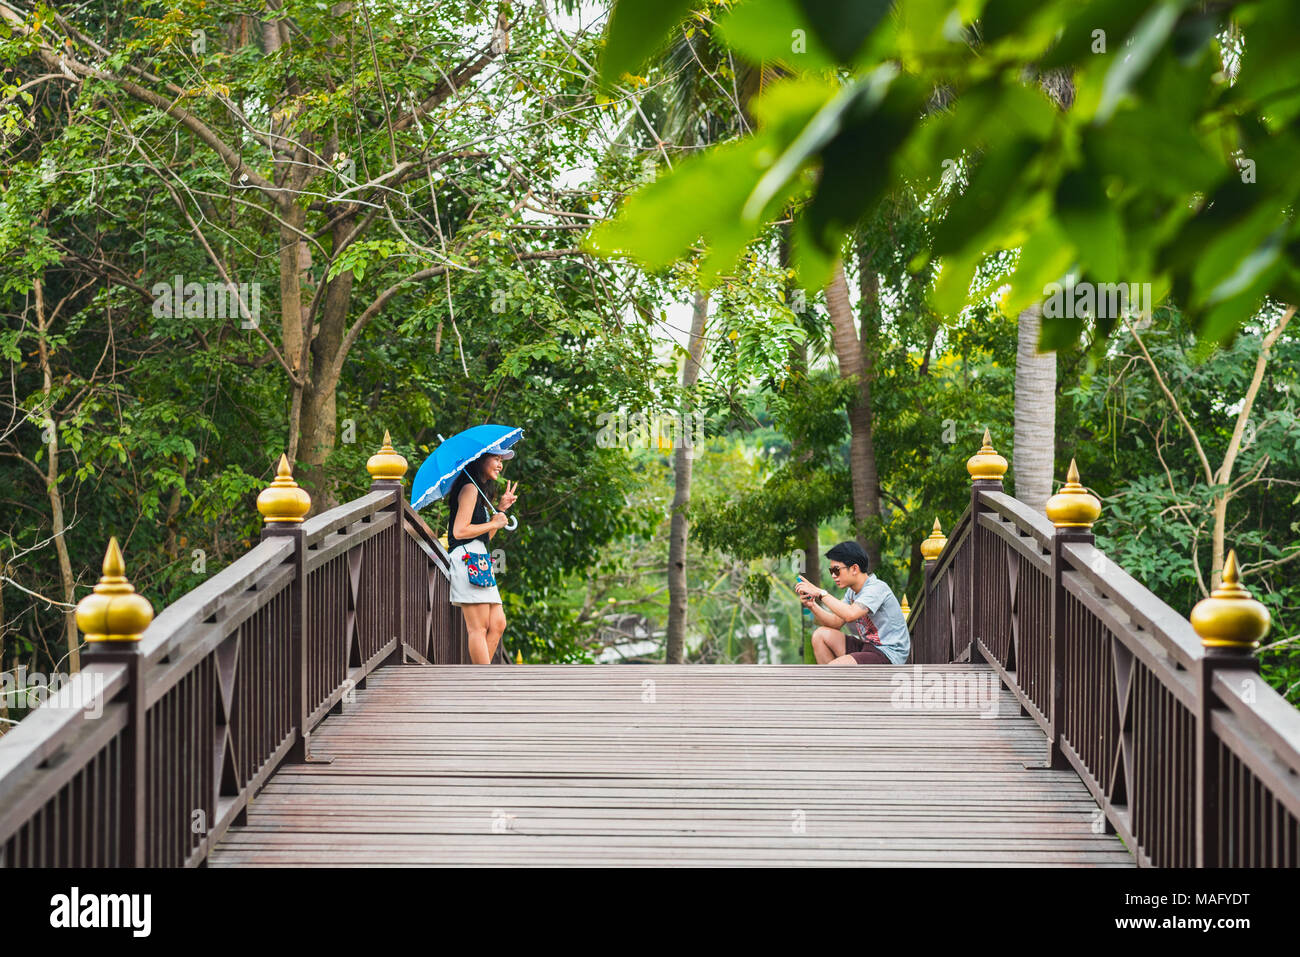 Young Asian man photographs a smiling young Asian woman with blue umbrella on wooden bridge in park in Bang Krachao (Bang Kachao), Bangkok, Thailand. Stock Photo